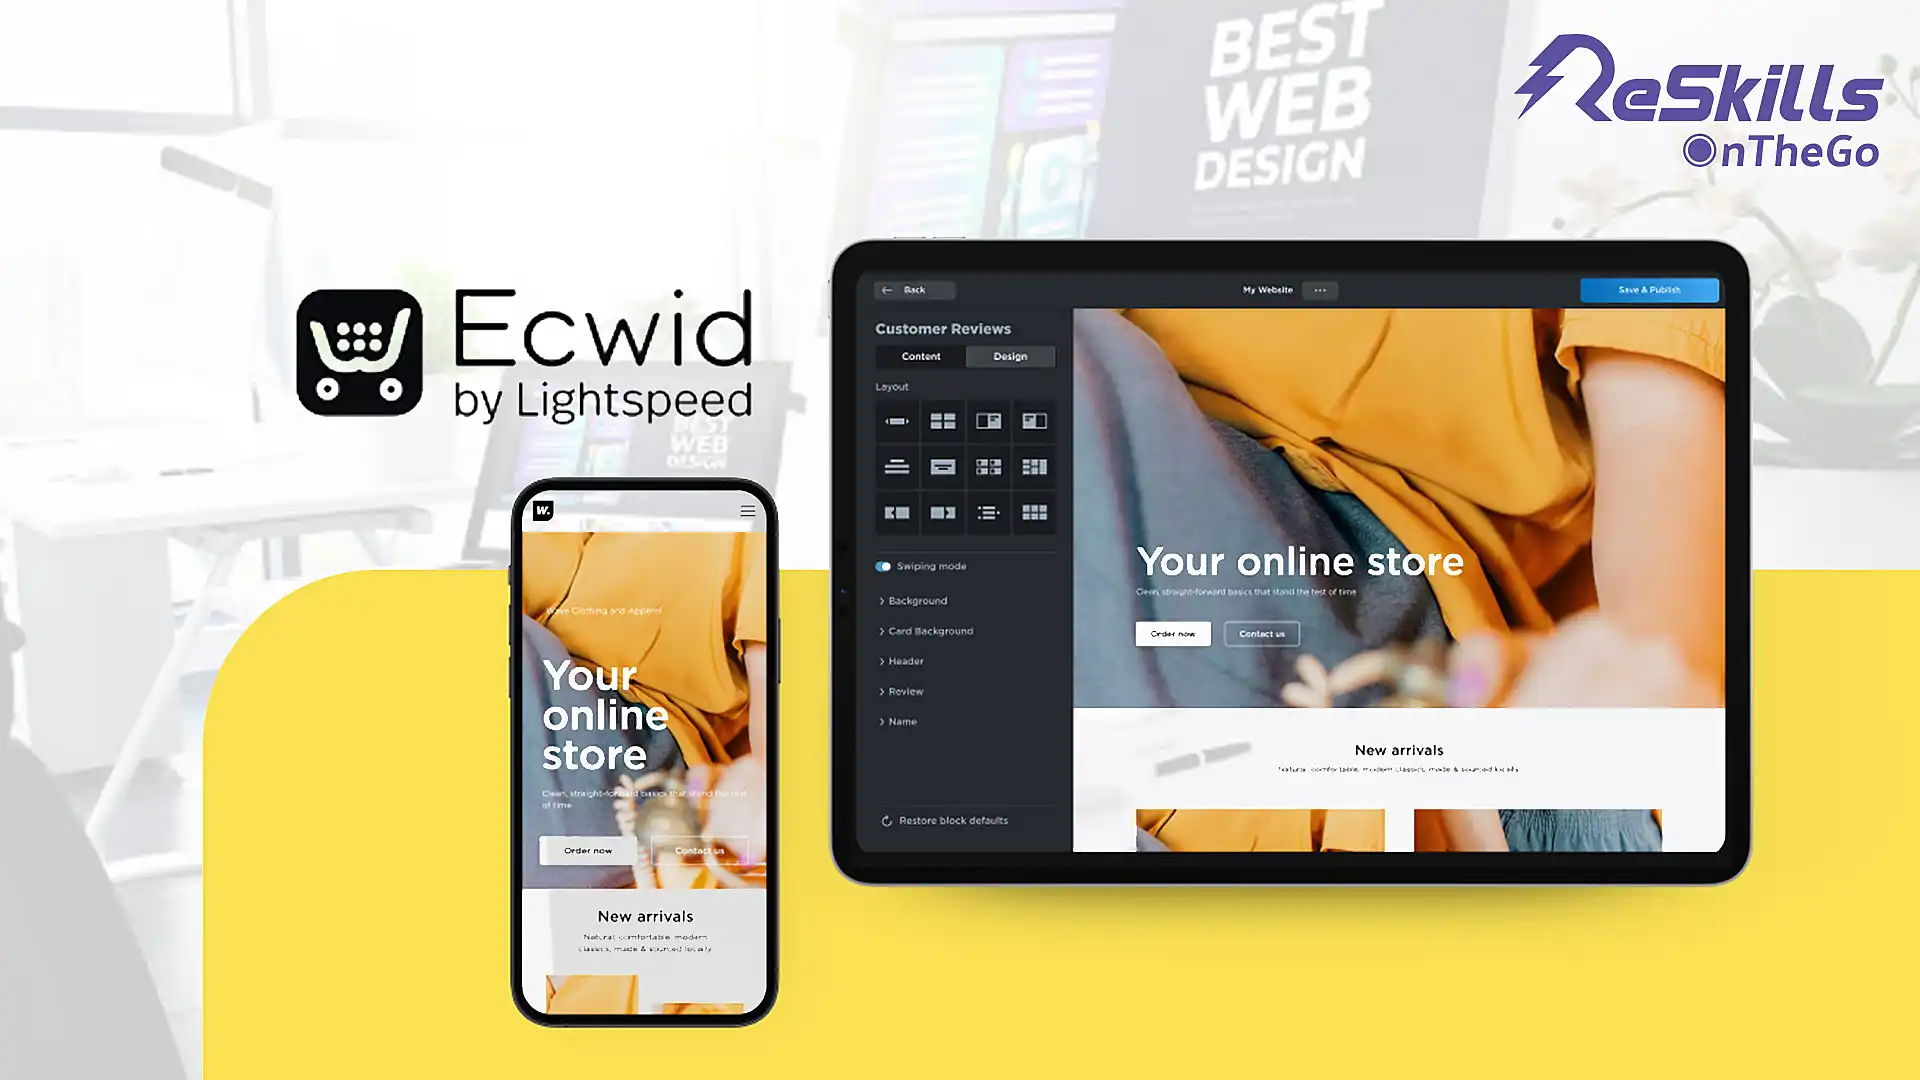 Basic Skills of Creating Online Store using Ecwid - ReSkills